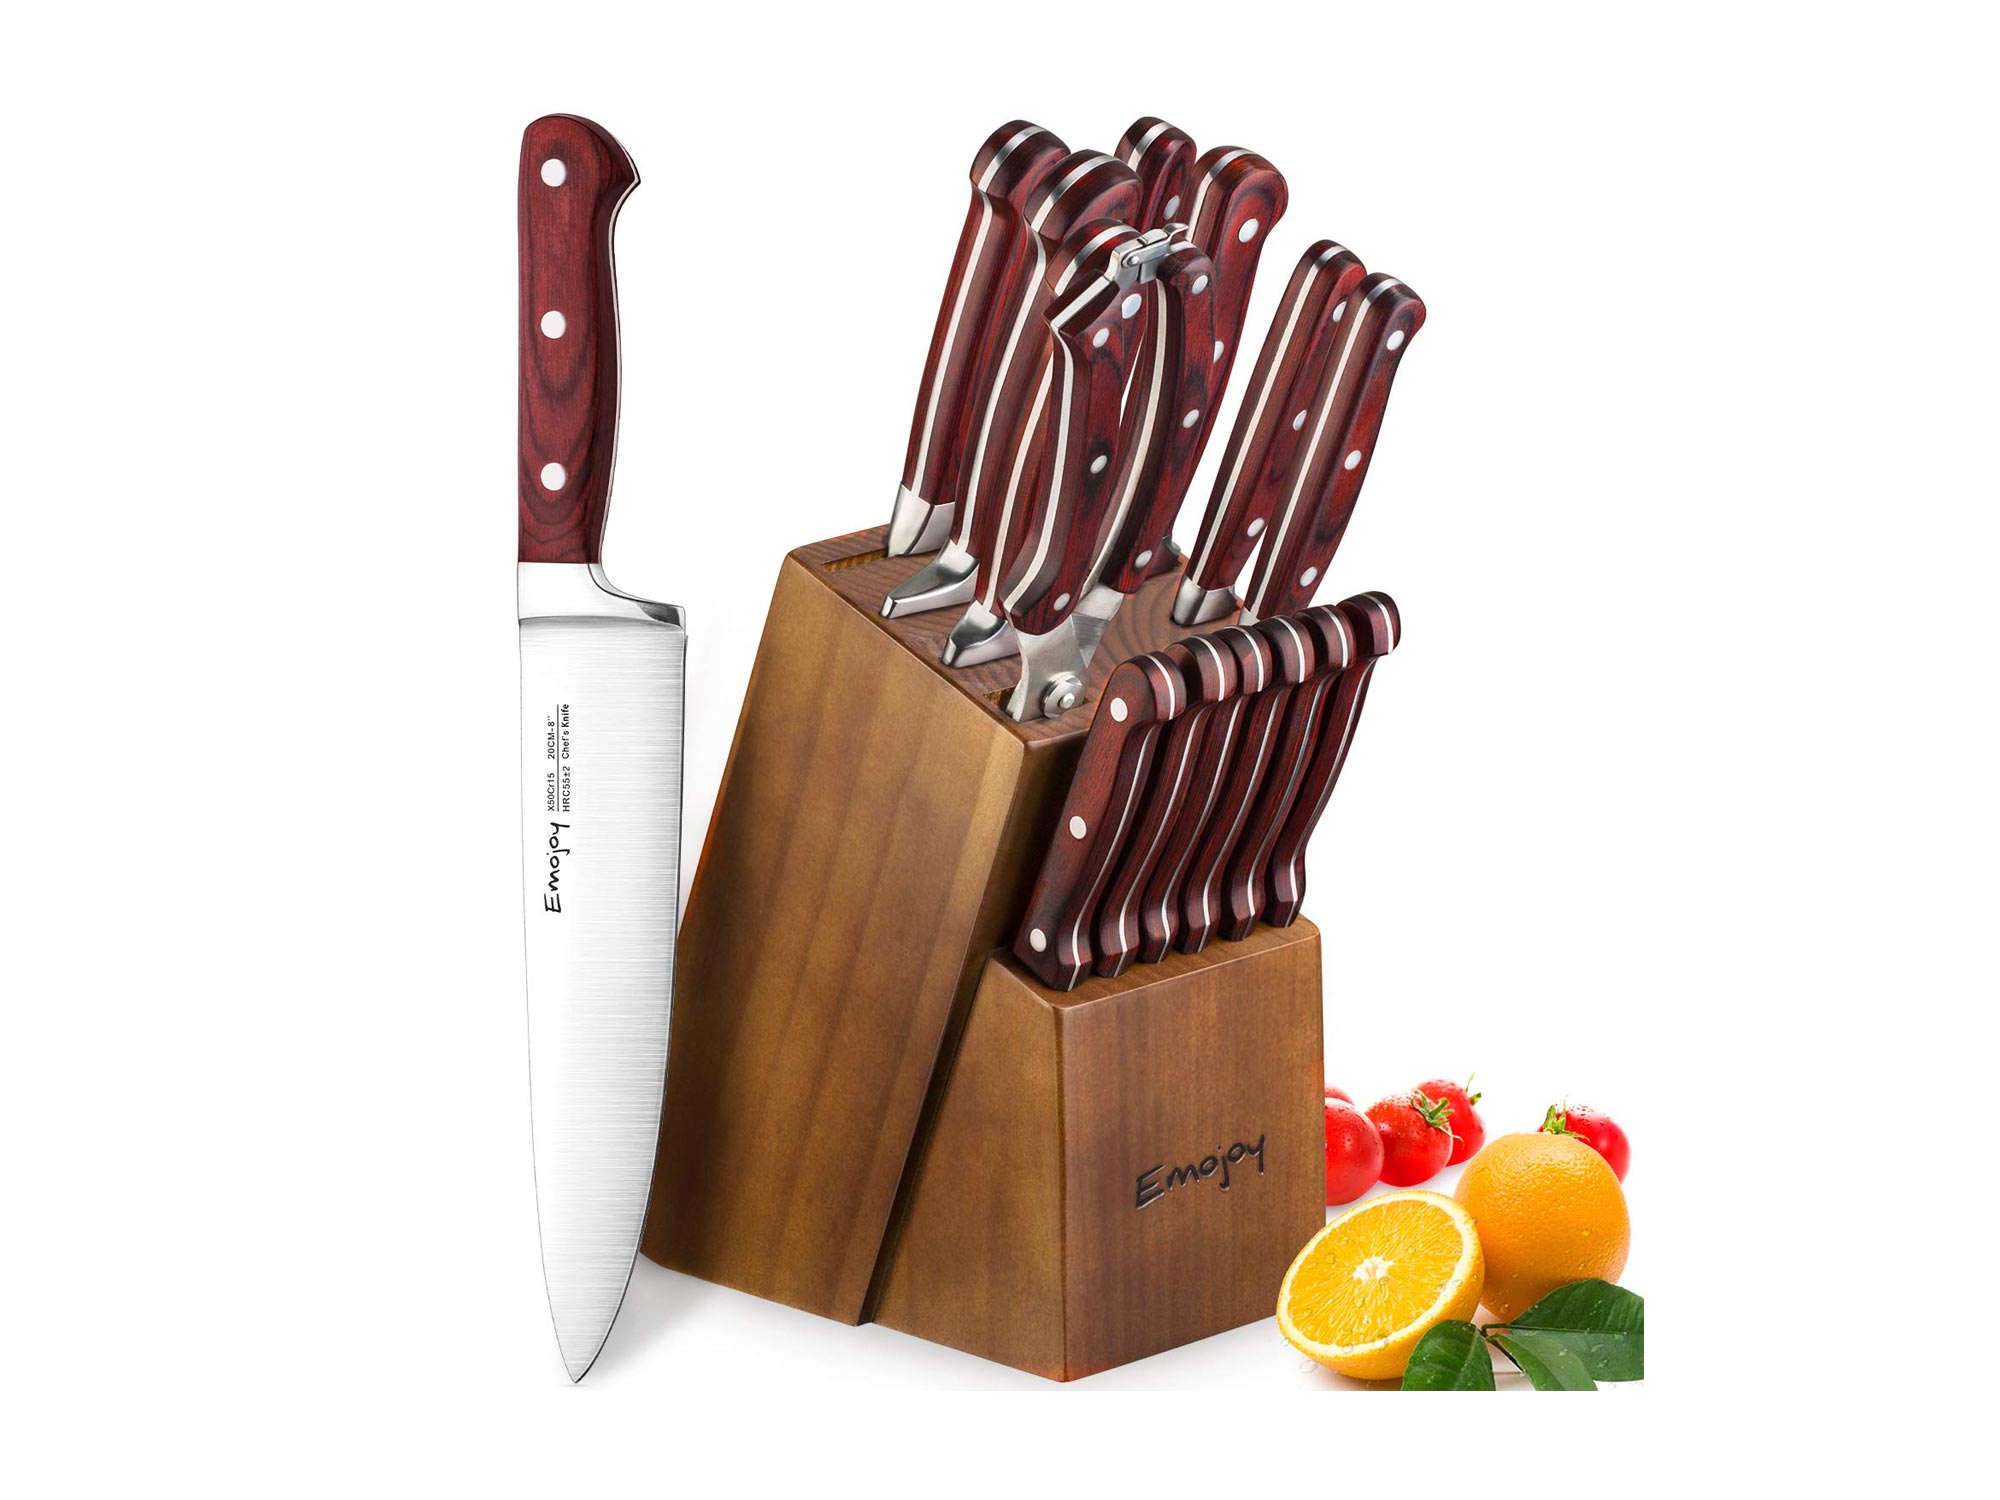 Emojay knife set